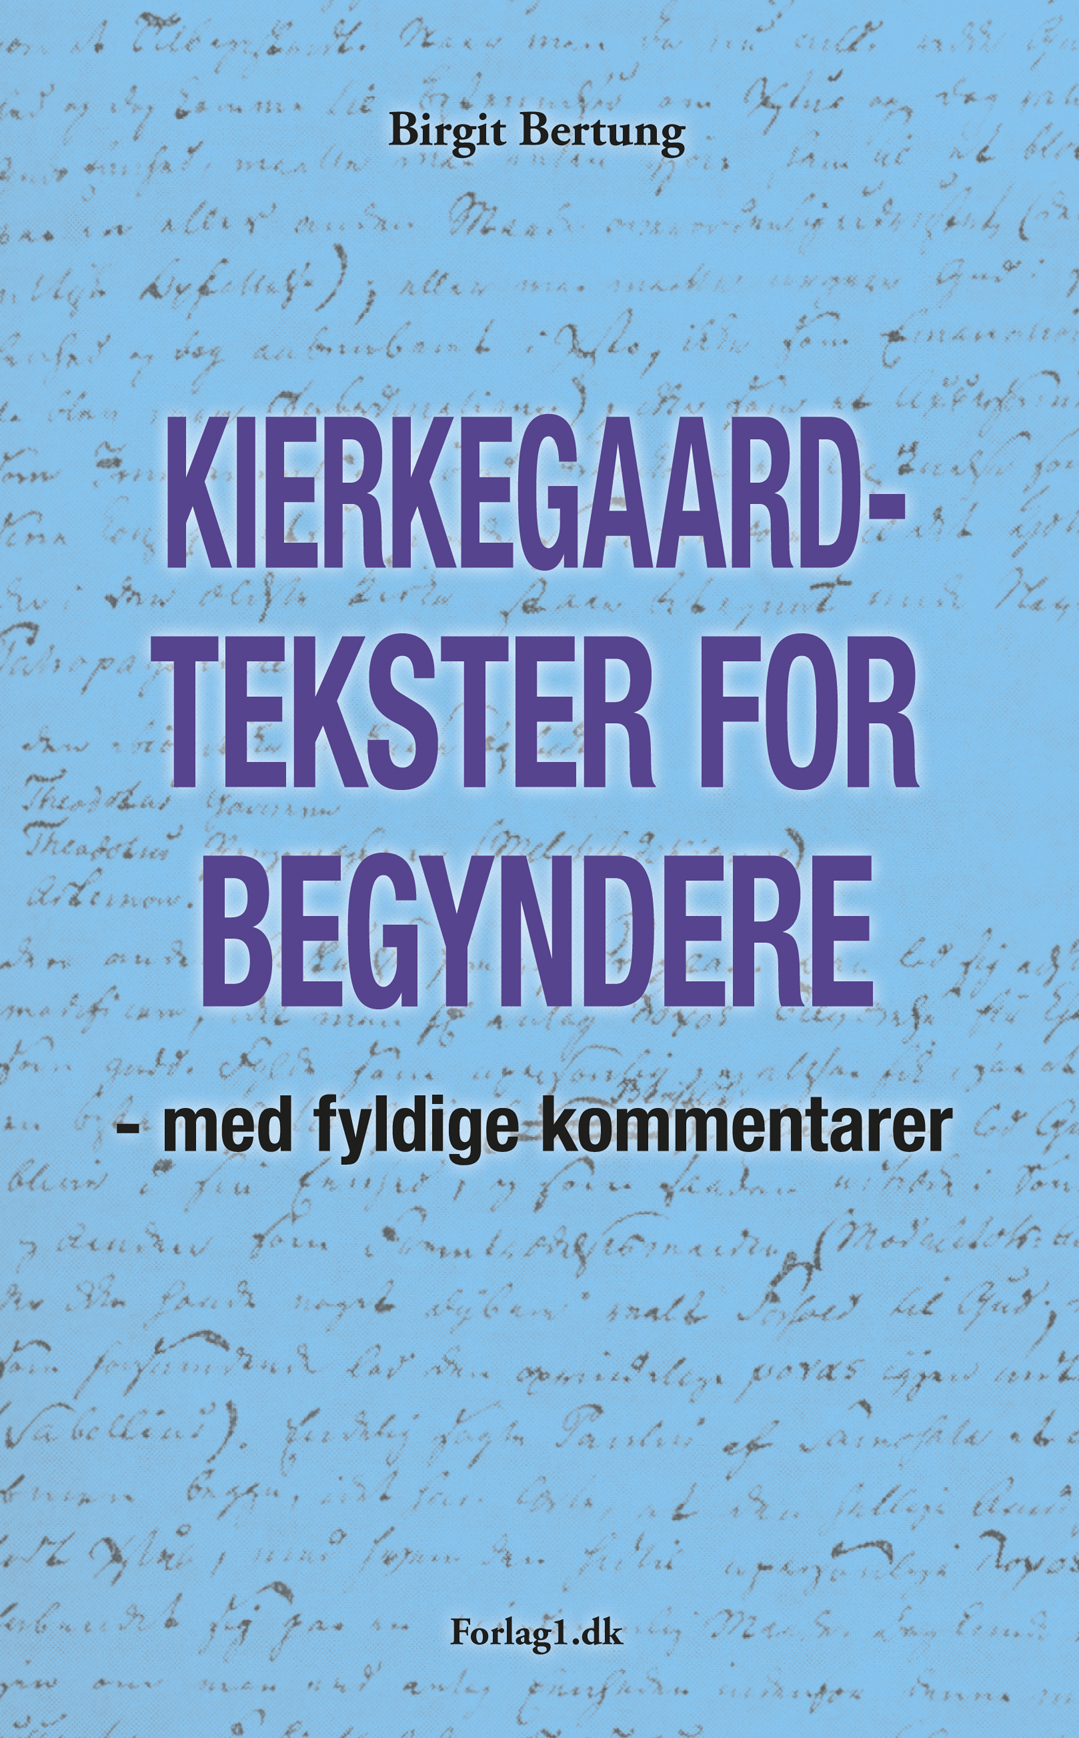 Kierkegaard-tekster for begyndere